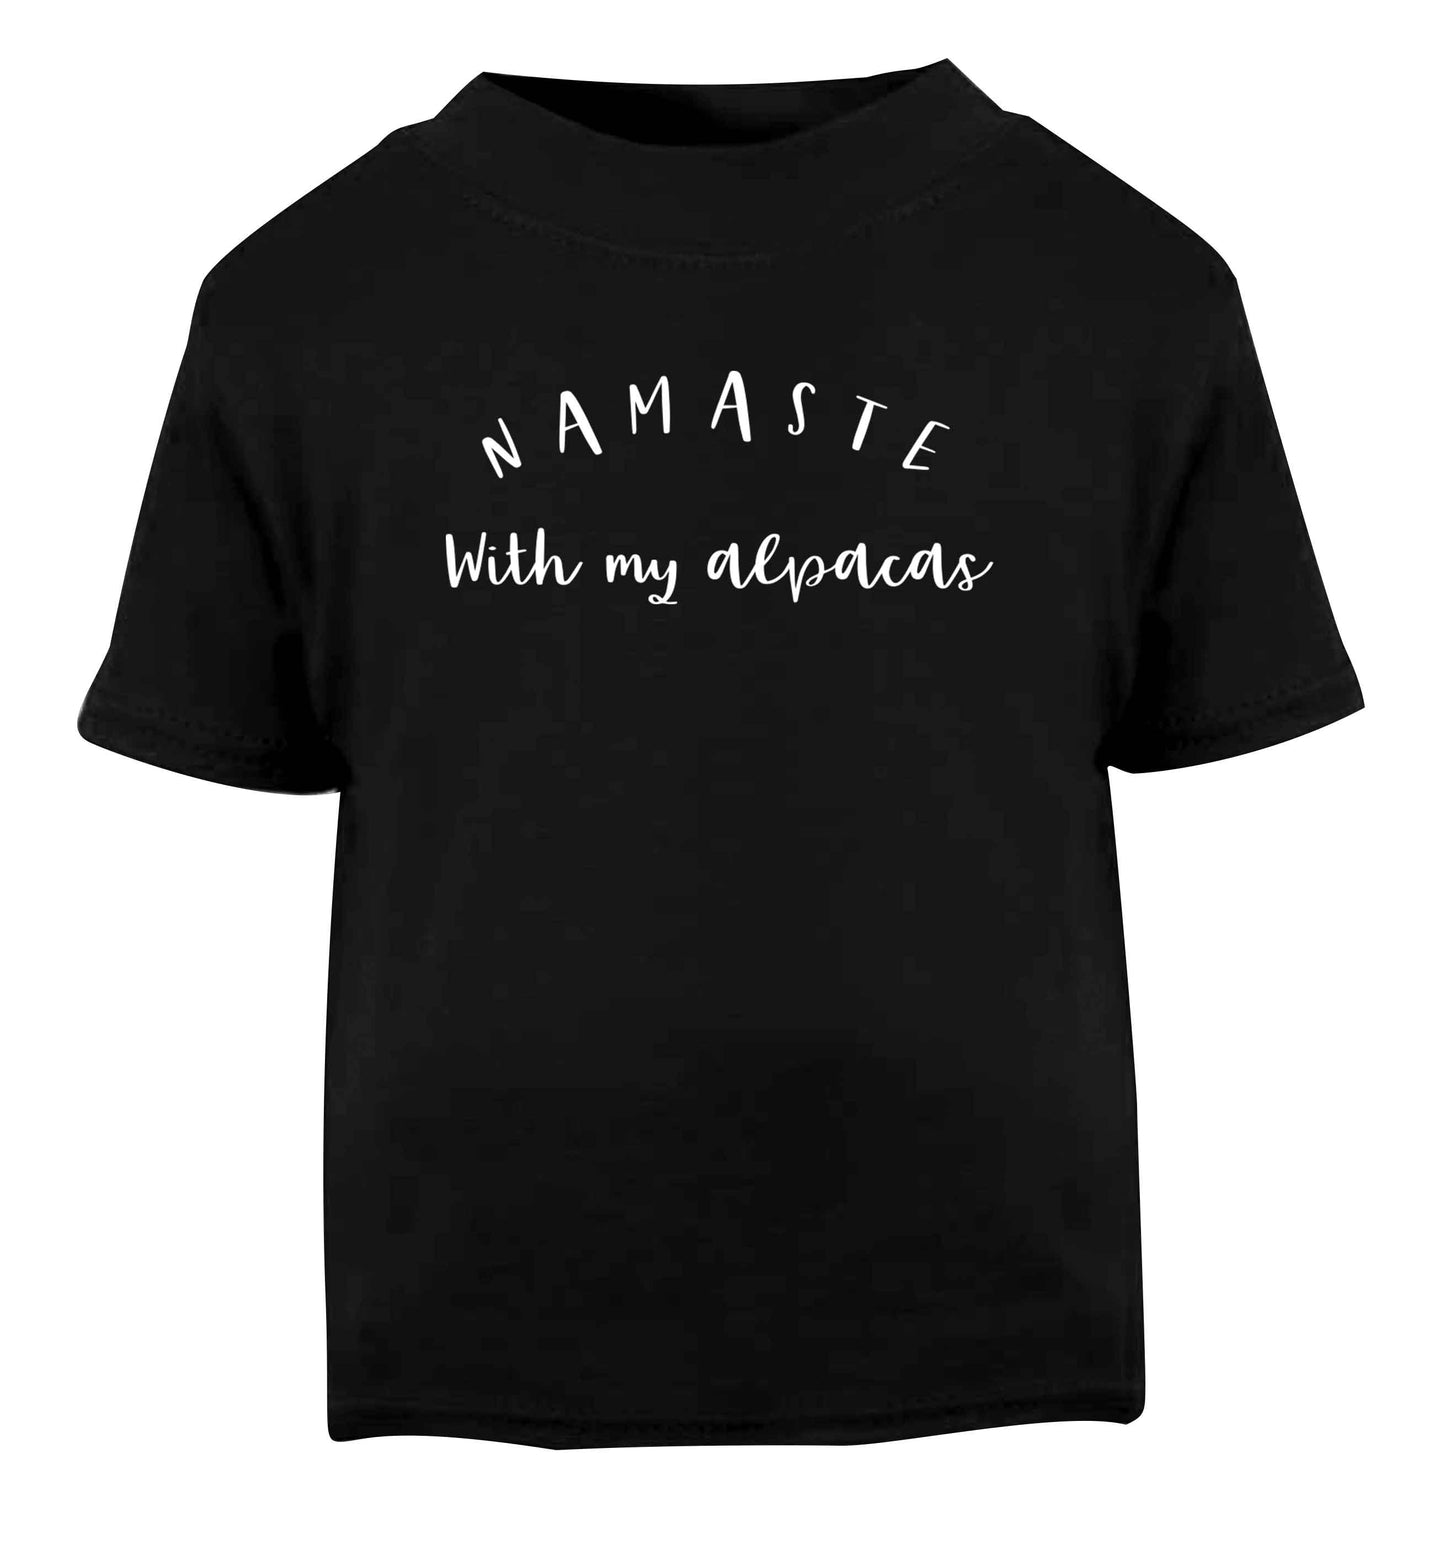 Namaste with my alpacas Black Baby Toddler Tshirt 2 years